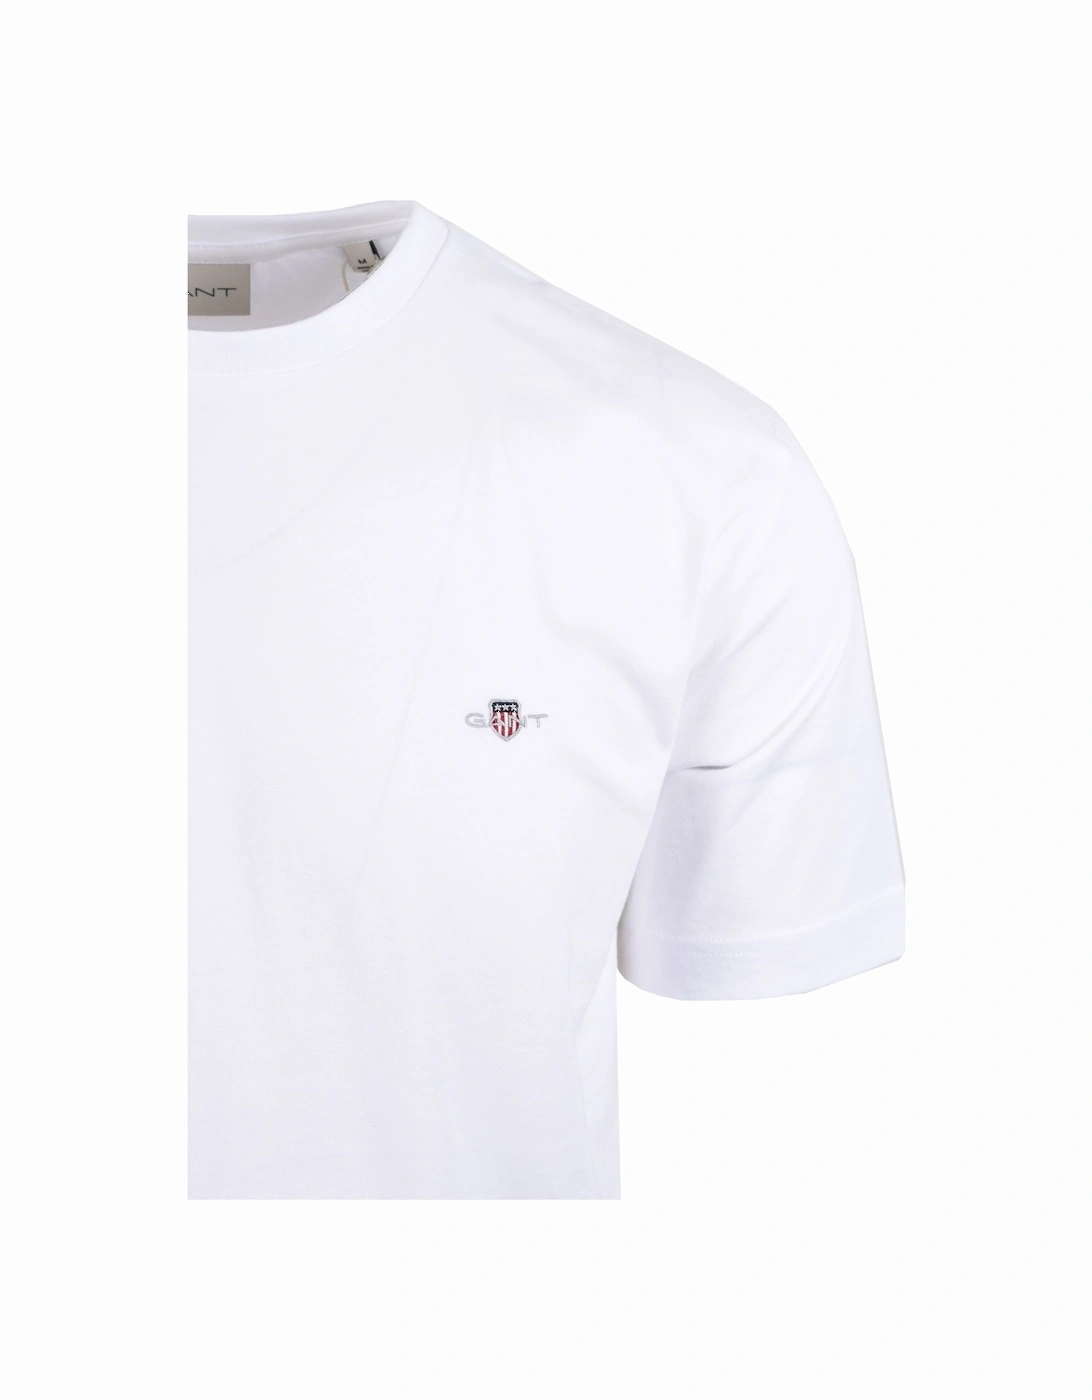 Reg Shield Ss T-shirt White